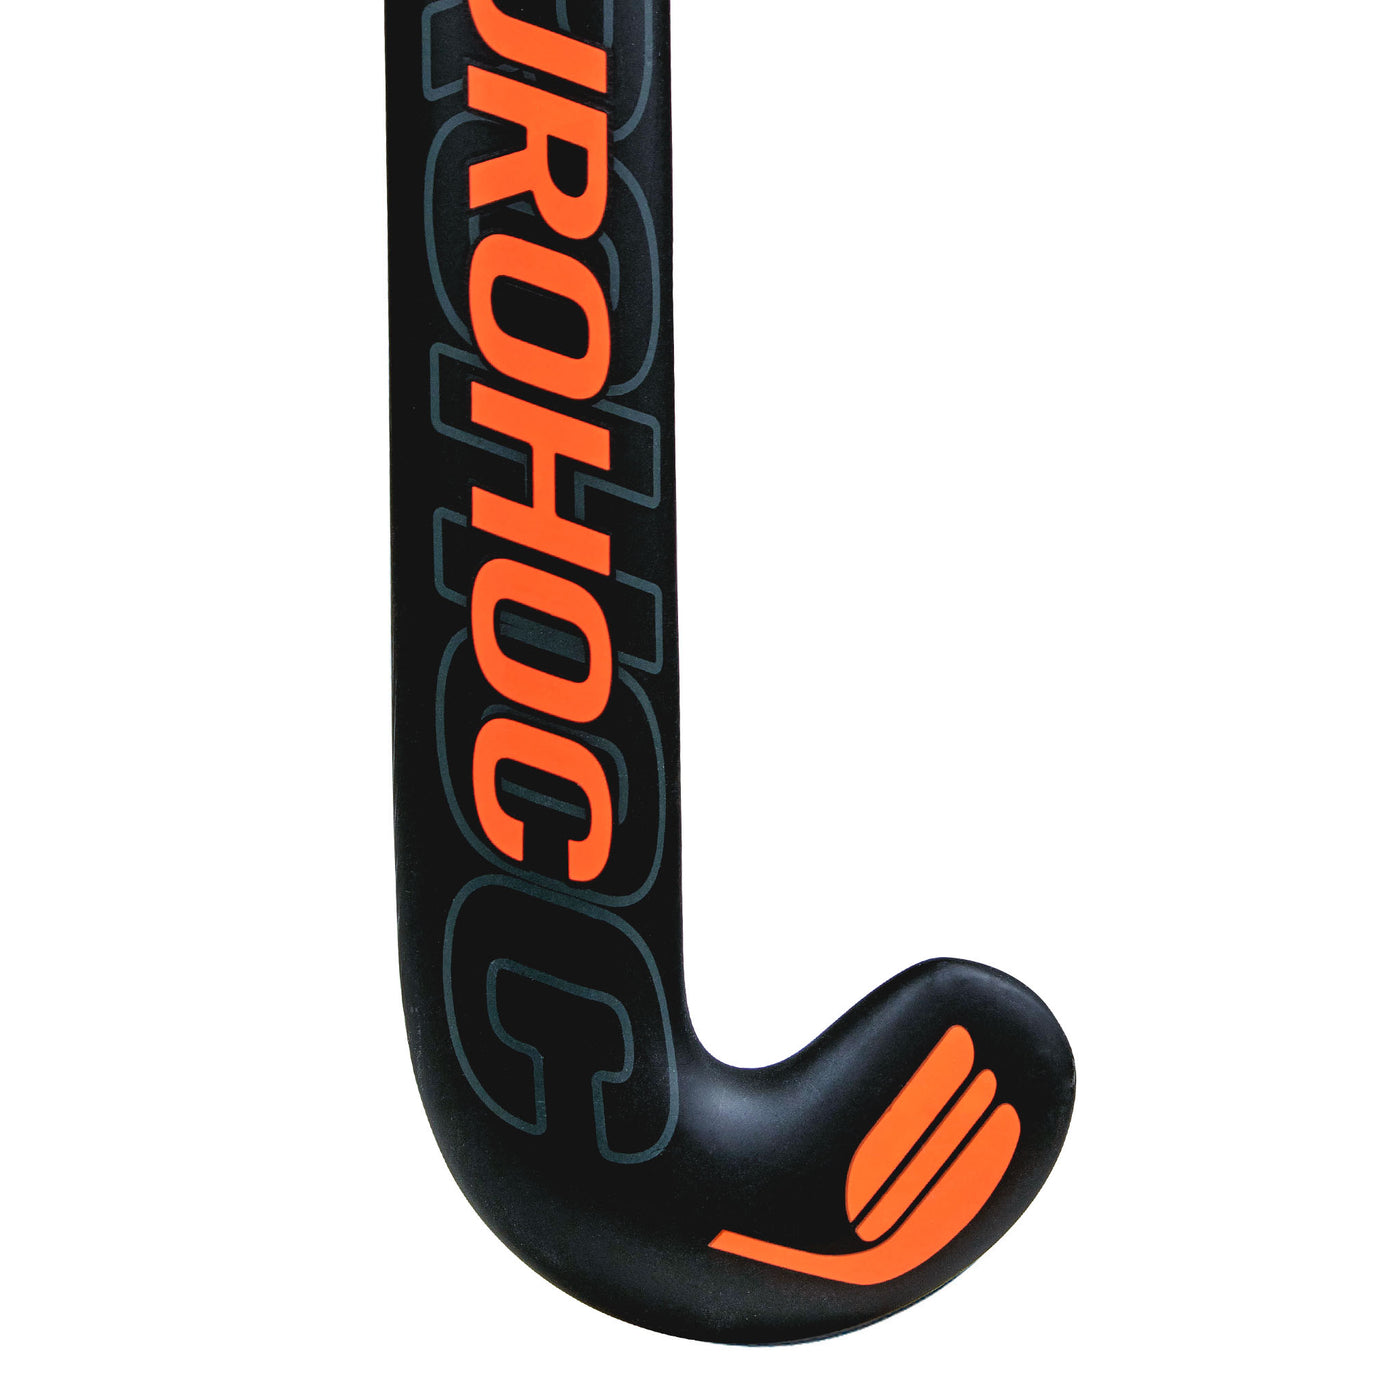 Eurohoc 10% Carbon Hockey Stick